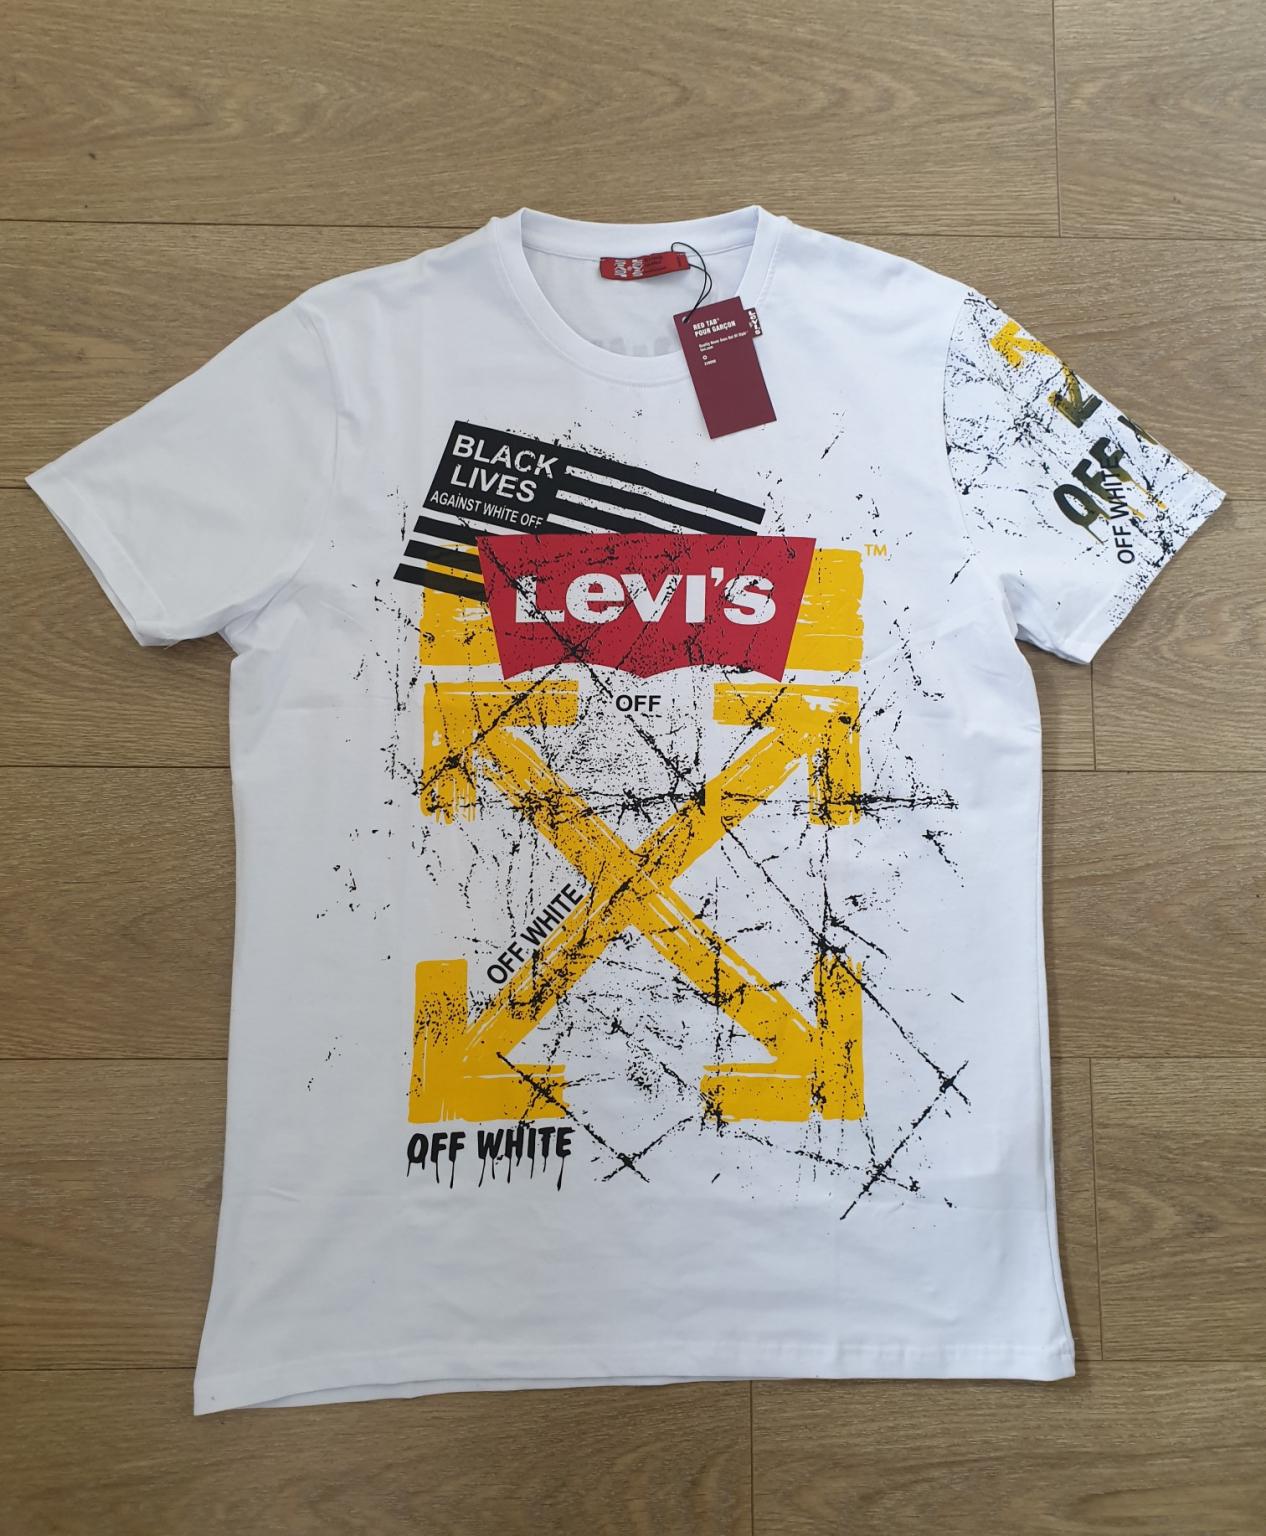 levis off white t shirt